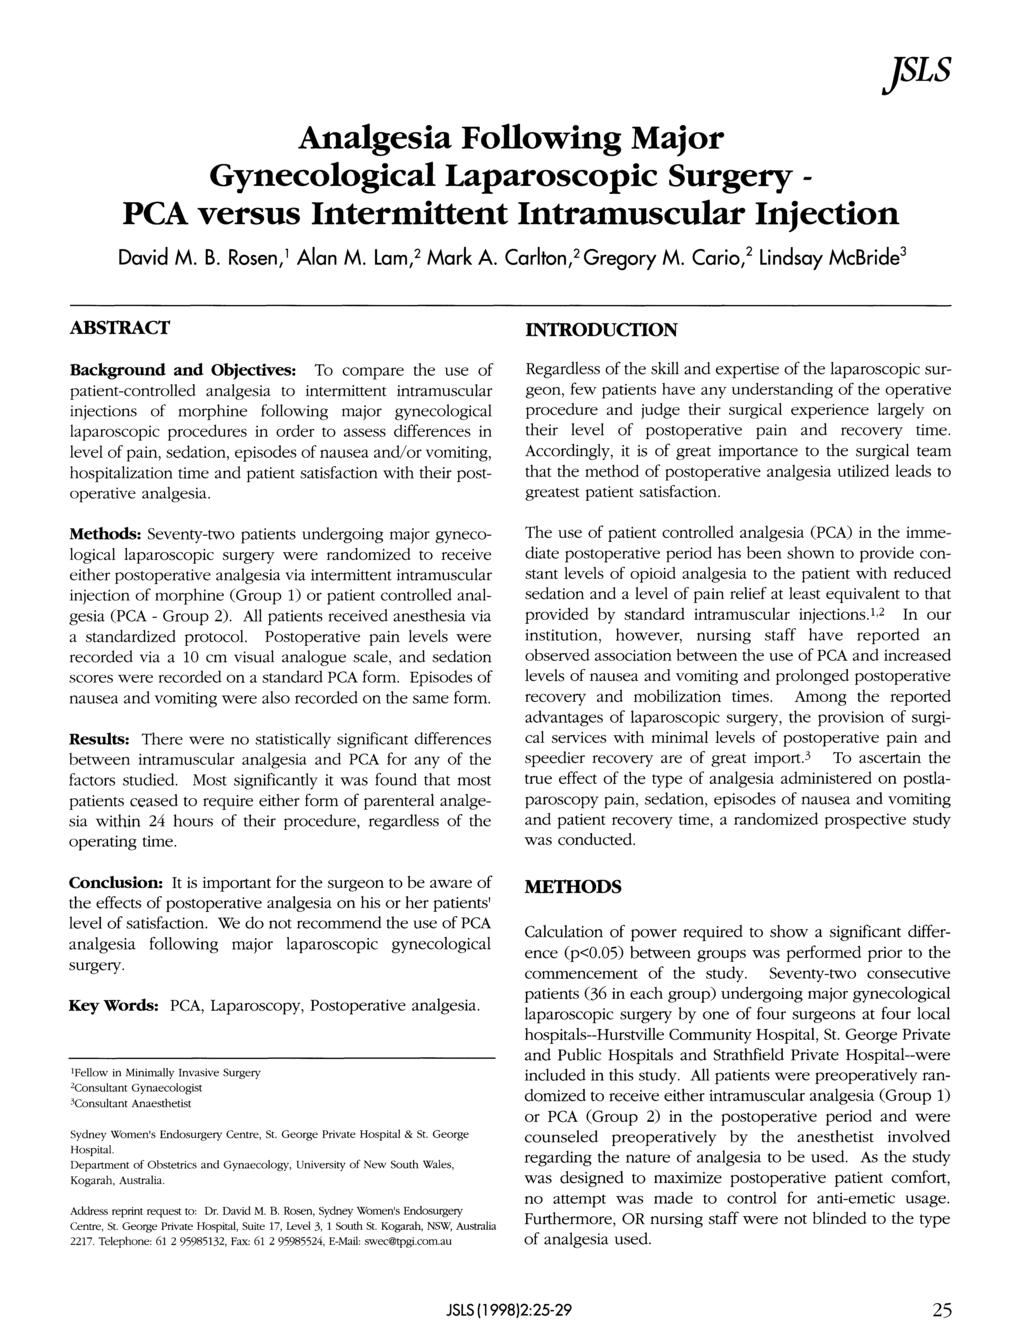 Analgesia Following Major Gynecological Laparoscopic Surgery - PCA versus Intermittent Intramuscular Injection David M. B. Rosen, Alan M. Lam, Mark A. Carlton, Gregory M.